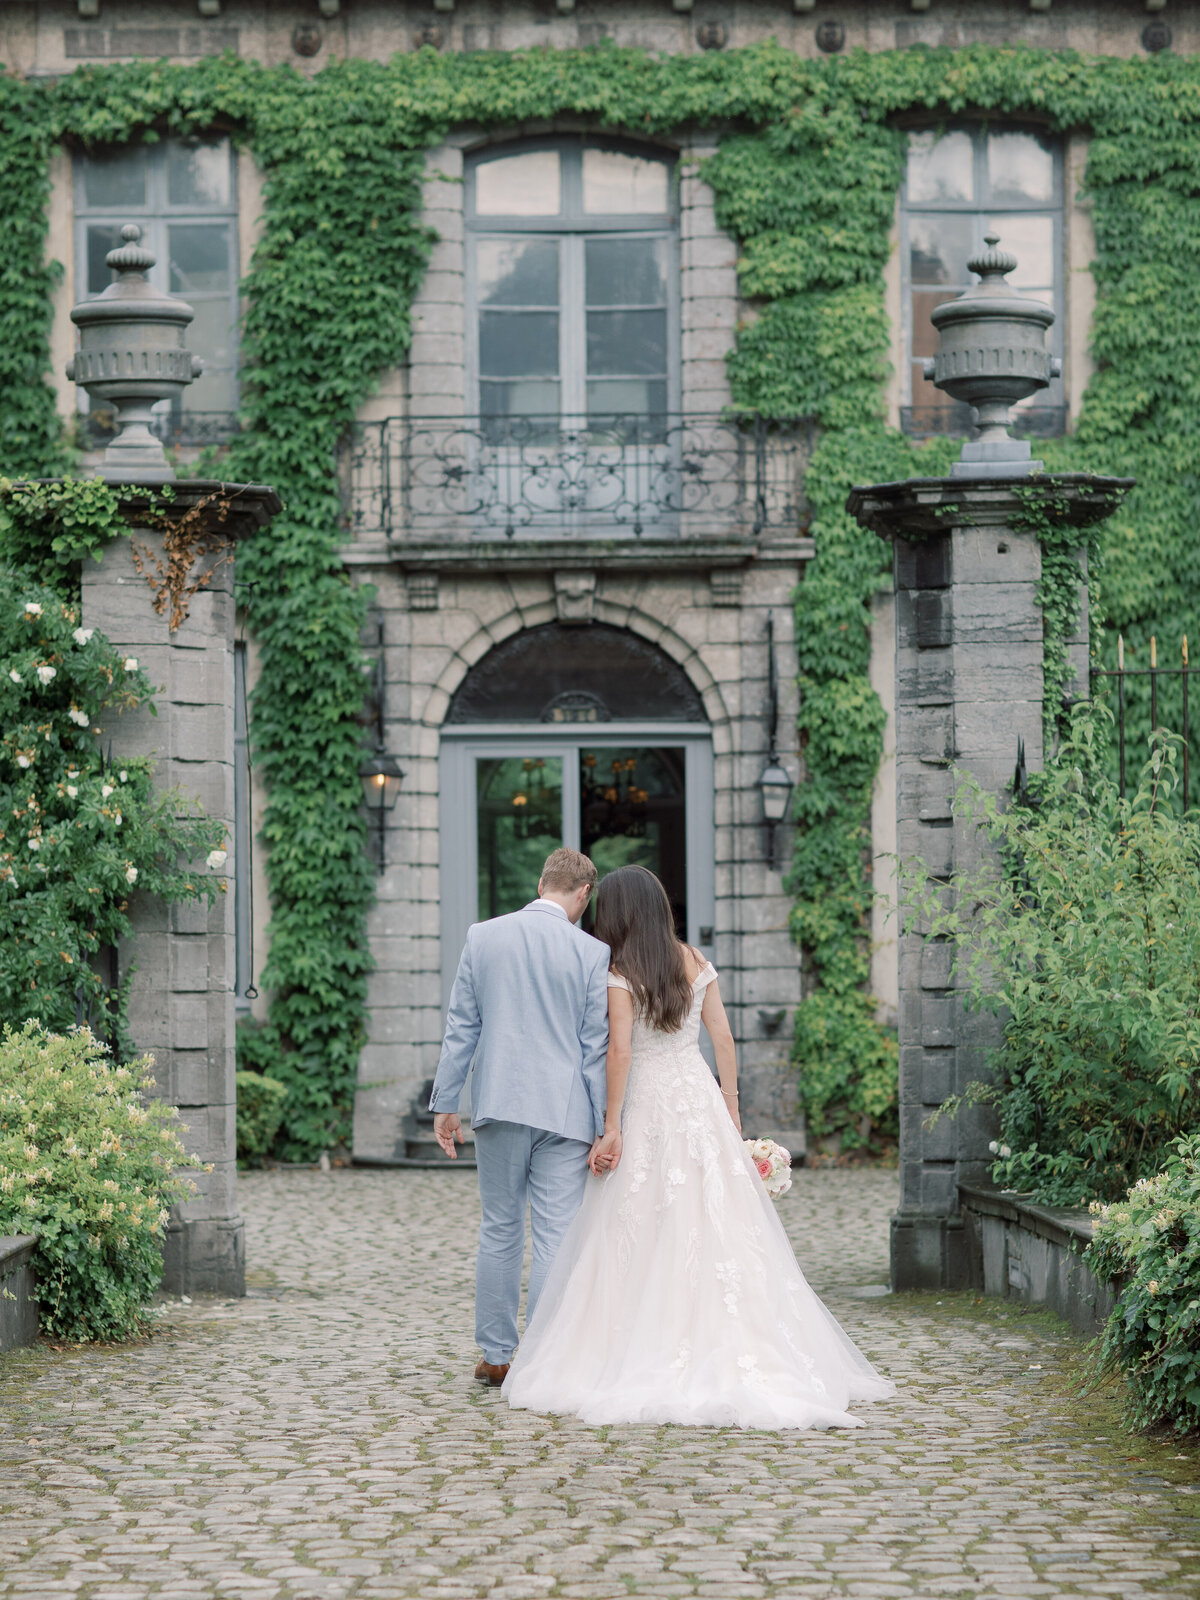 135-10072021-_81A3119-Olivia-Poncelet-Wedding-Photographer-Belgium-Chateau-de-Ruisbroek-Chloe-Pieter-WEB-72